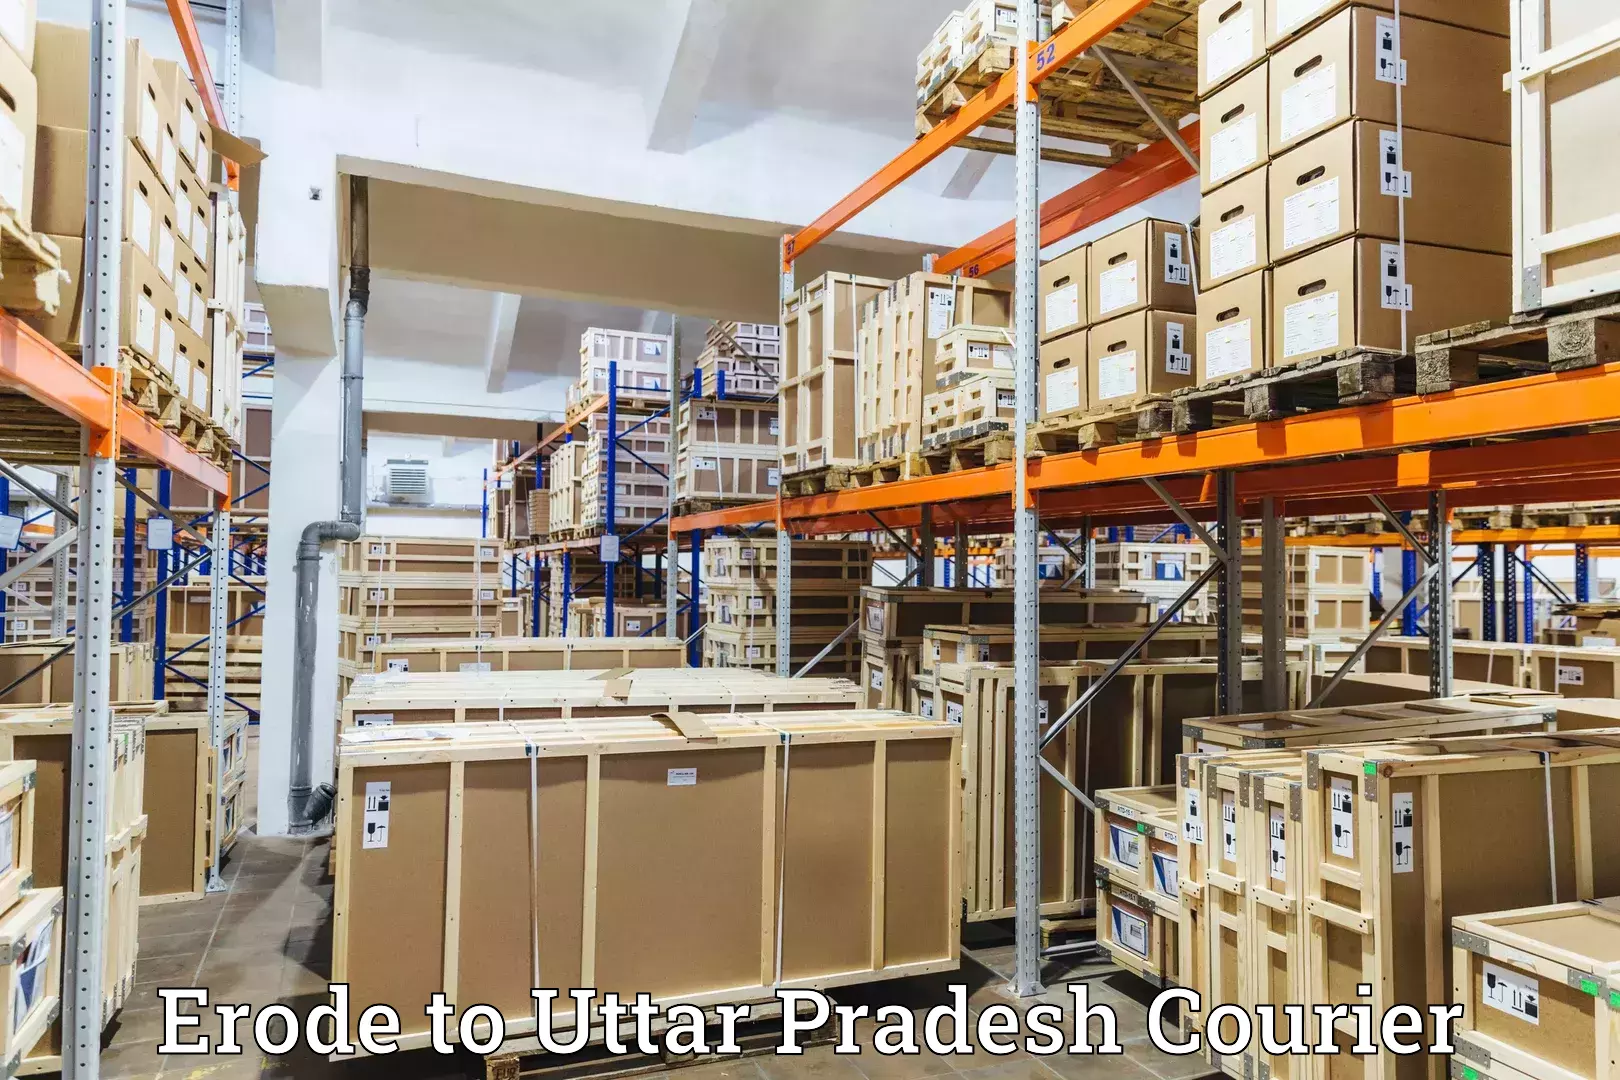 Courier service innovation Erode to Uttar Pradesh